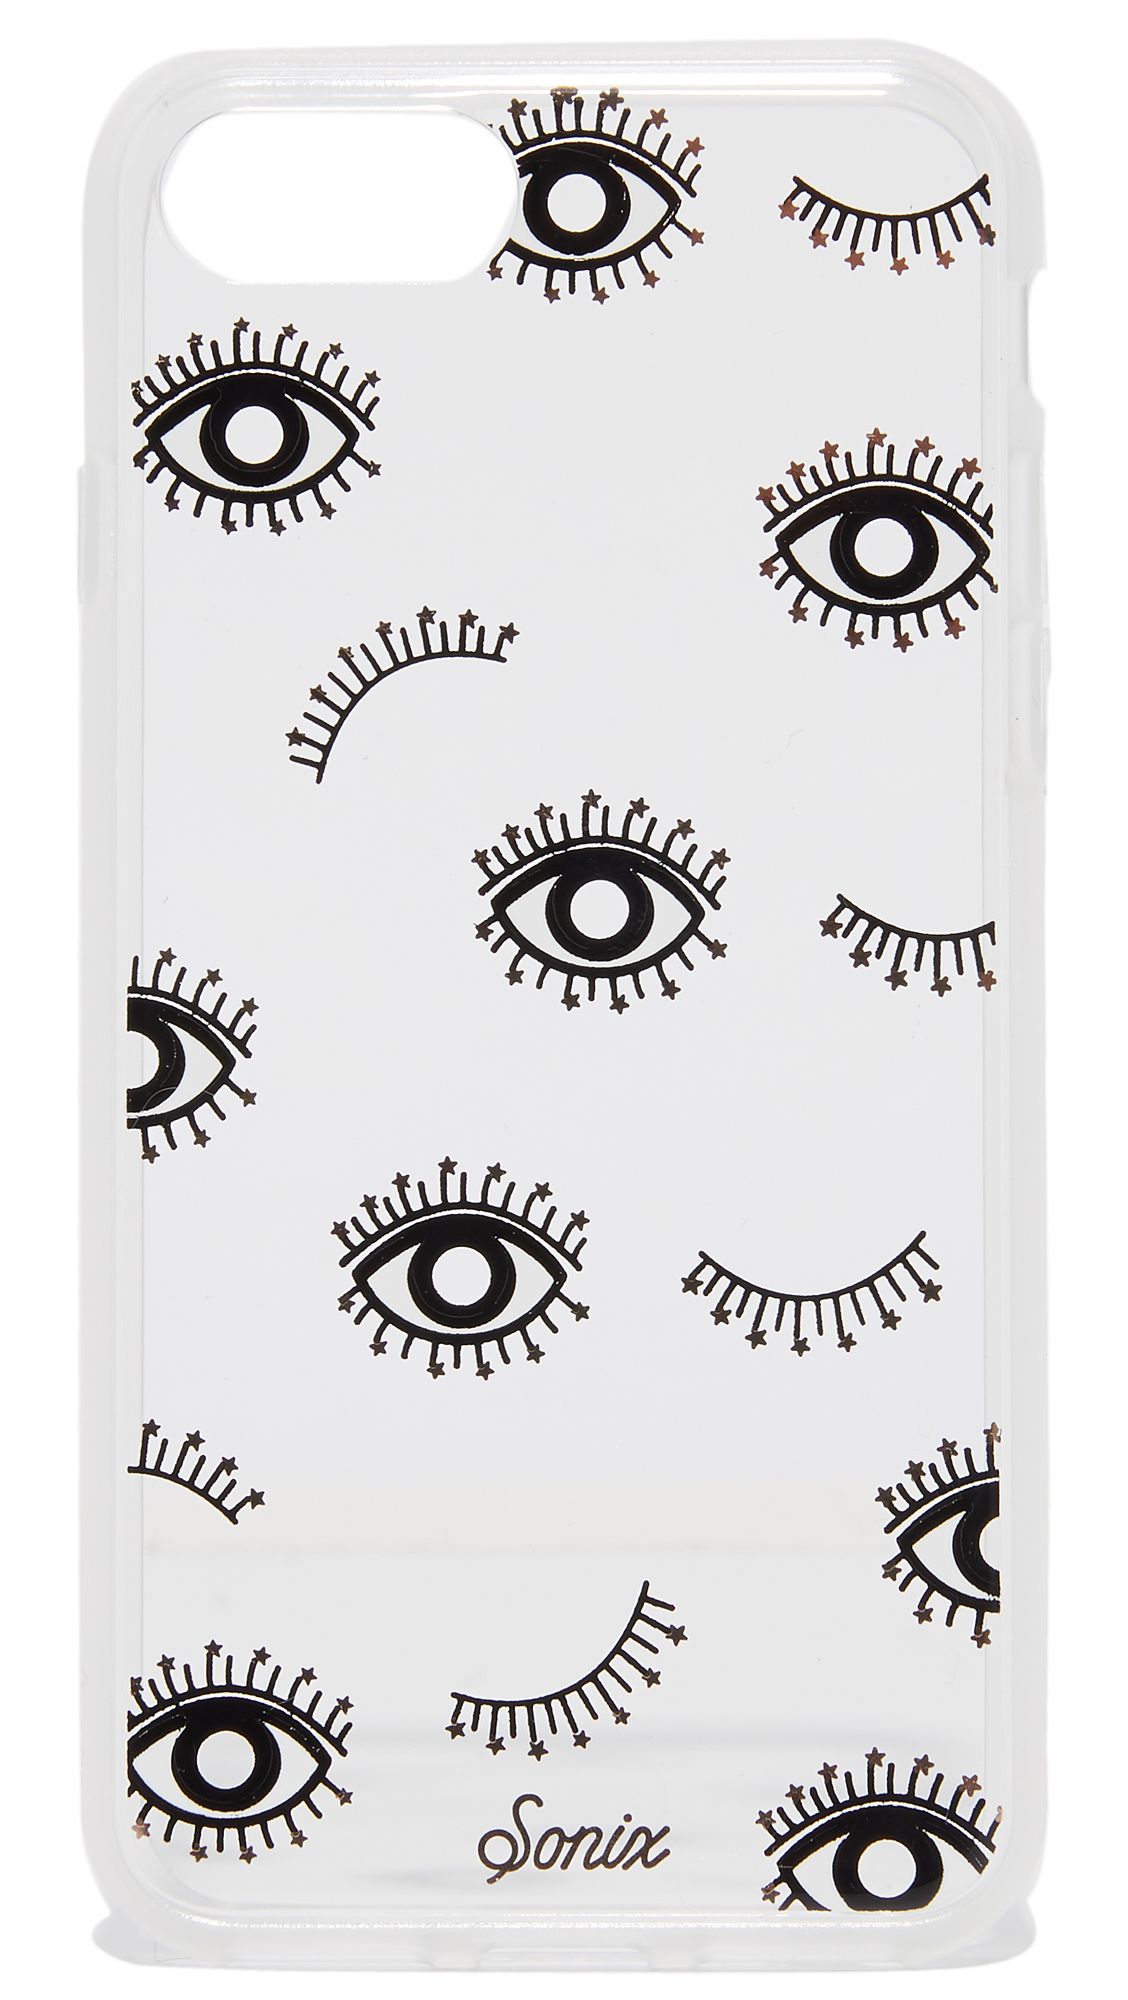 Starry Eyed iPhone 7 Case | Shopbop